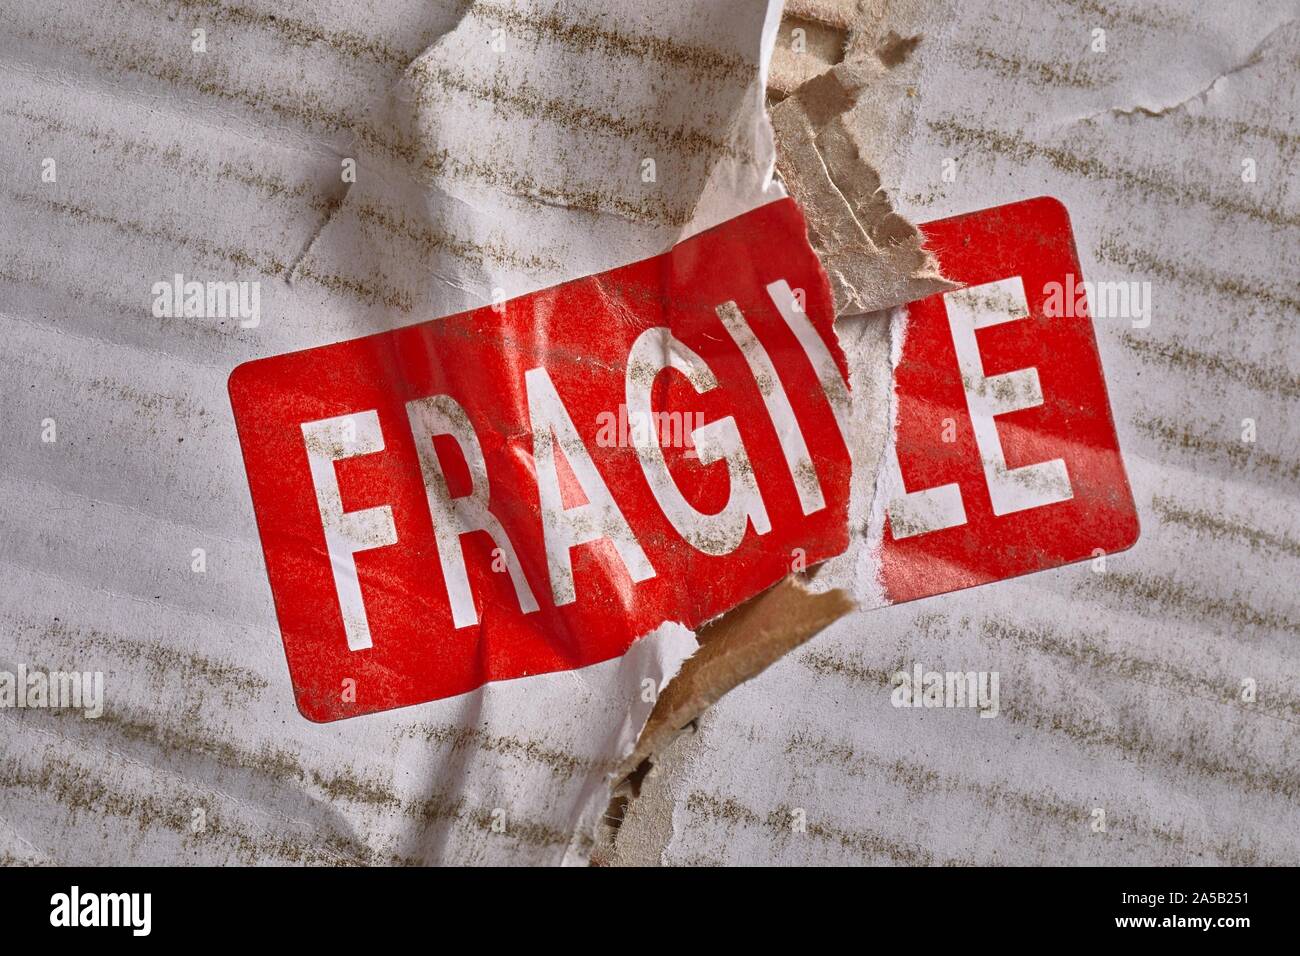 Fragile stamp closeup Stock Photo